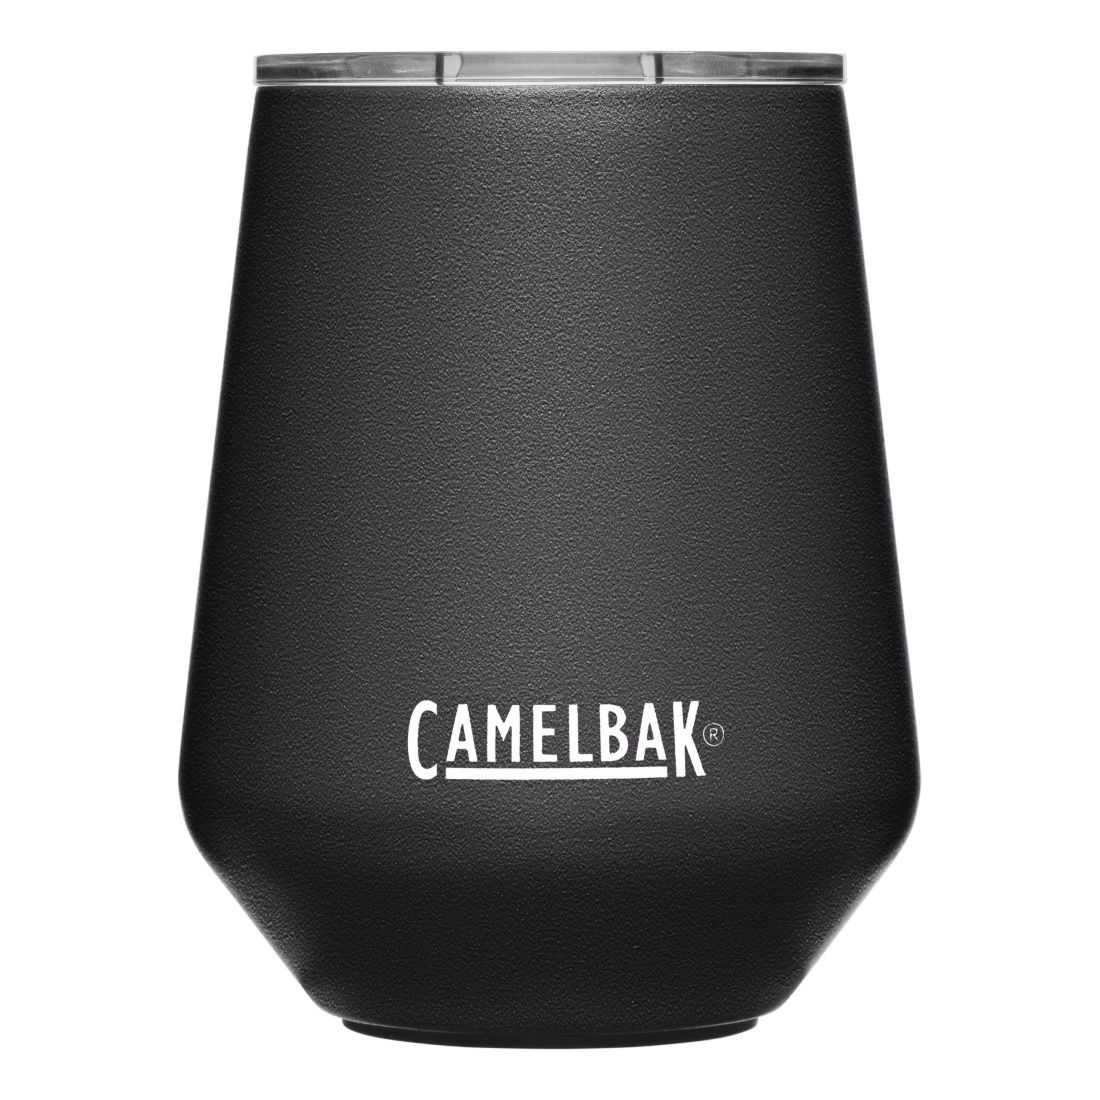 Camelbak Wine Tumbler Stainless Steel Vacuum Insulated 12Oz Black